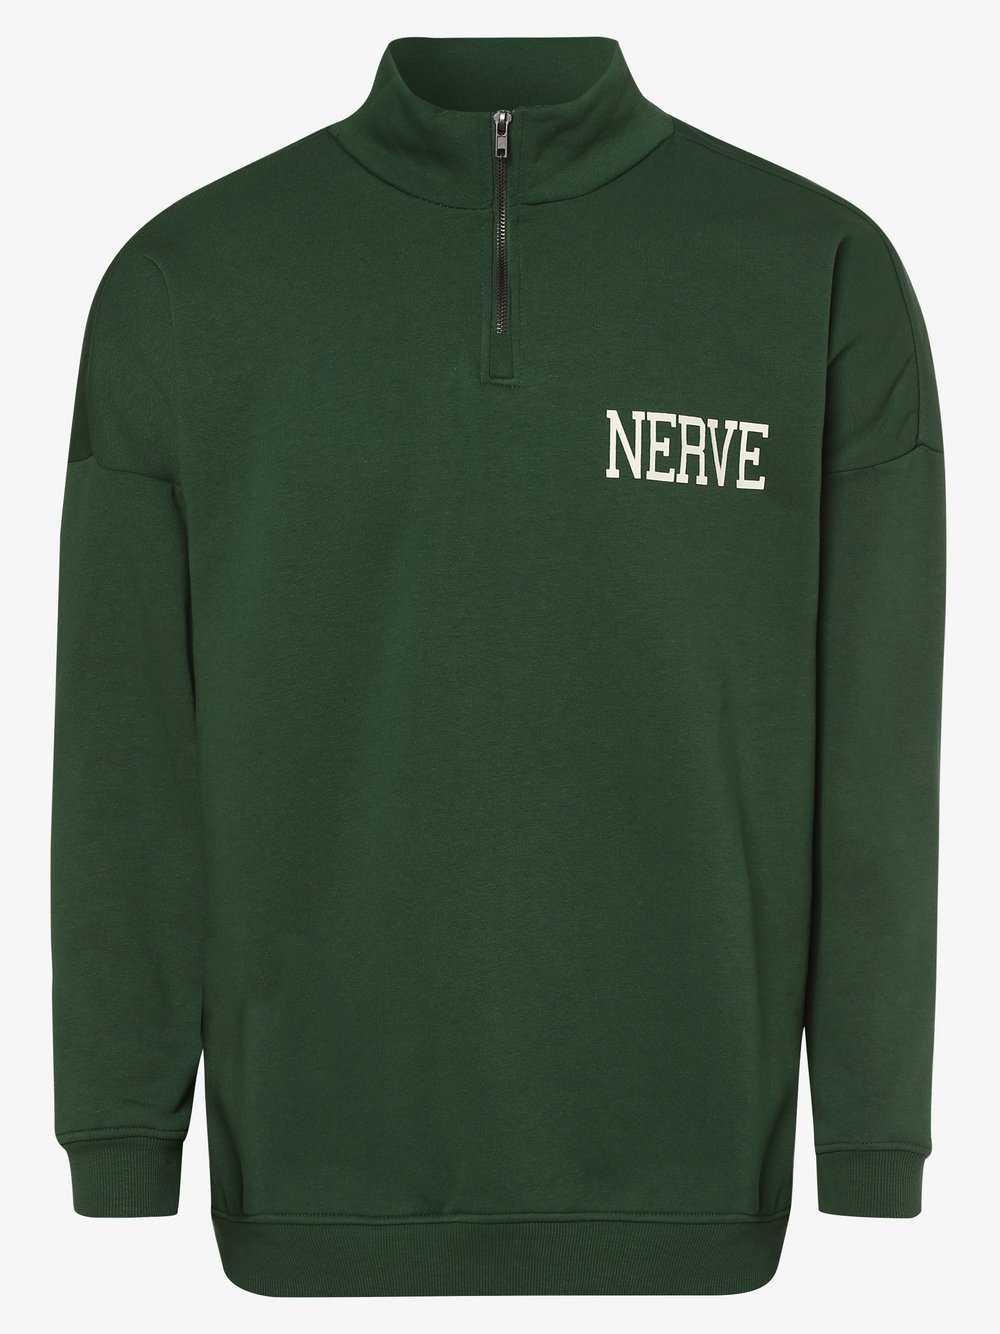 Nerve - Męska bluza nierozpinana – NESaint, zielony